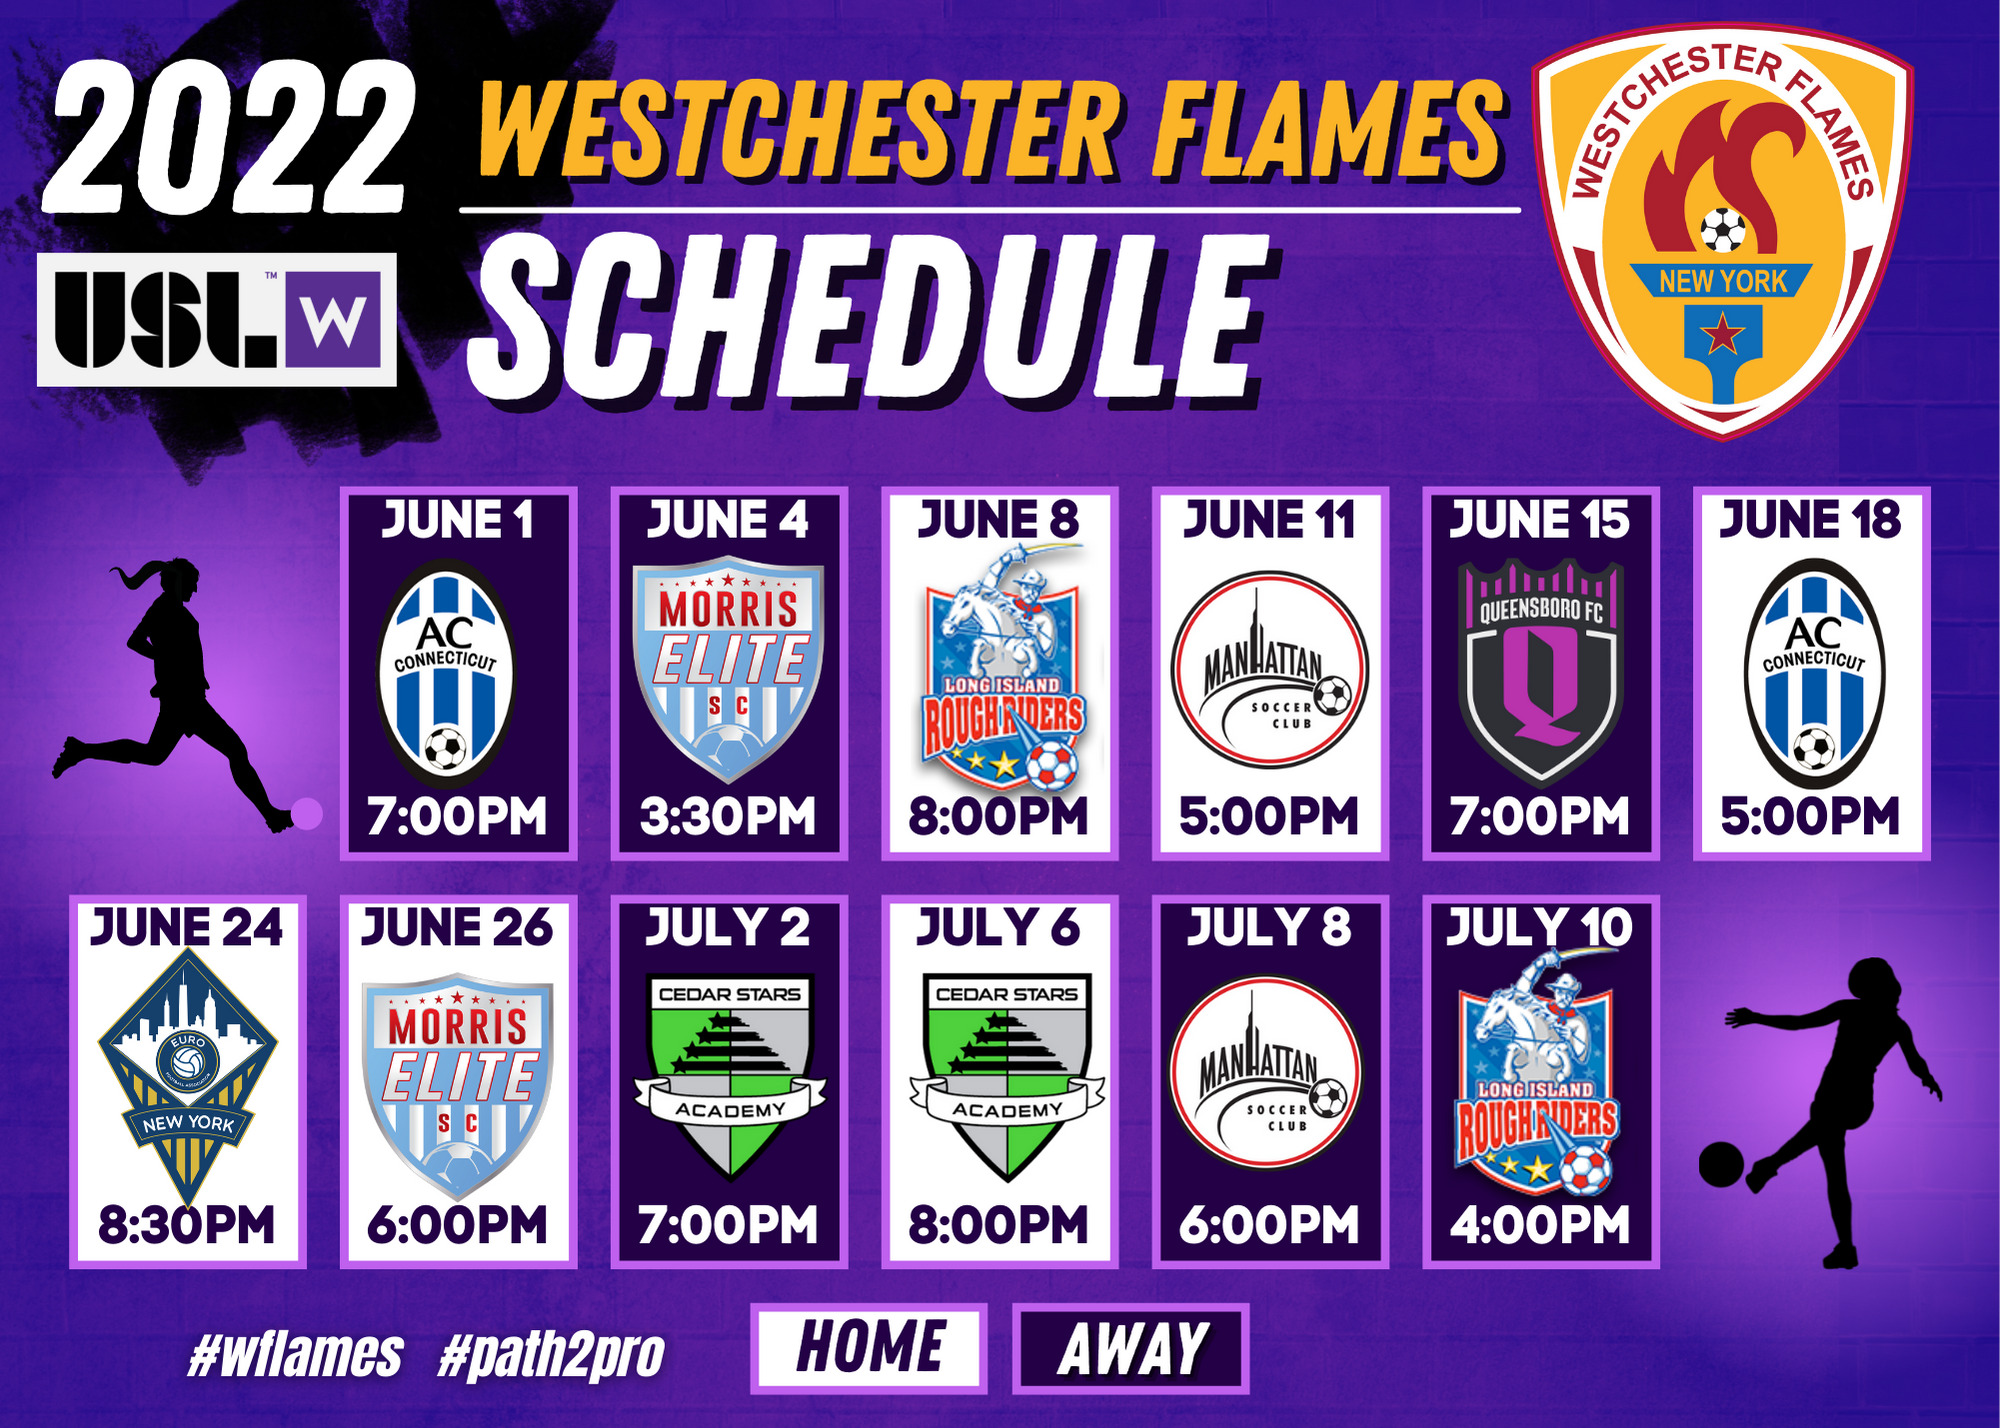 _USLW Schedule Westchester Flames (1)